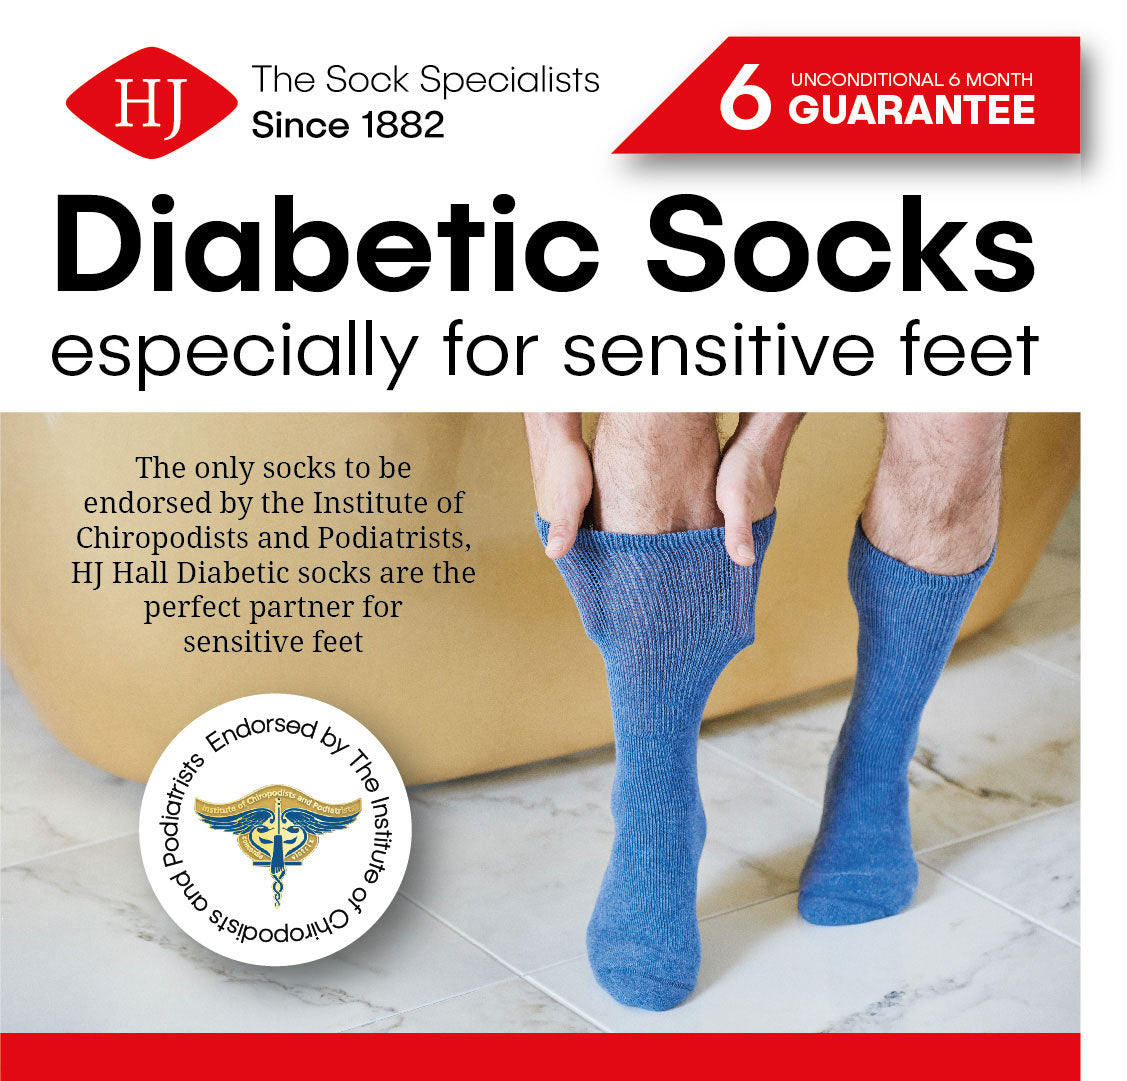 Diabetic socks especially for sensitive feet